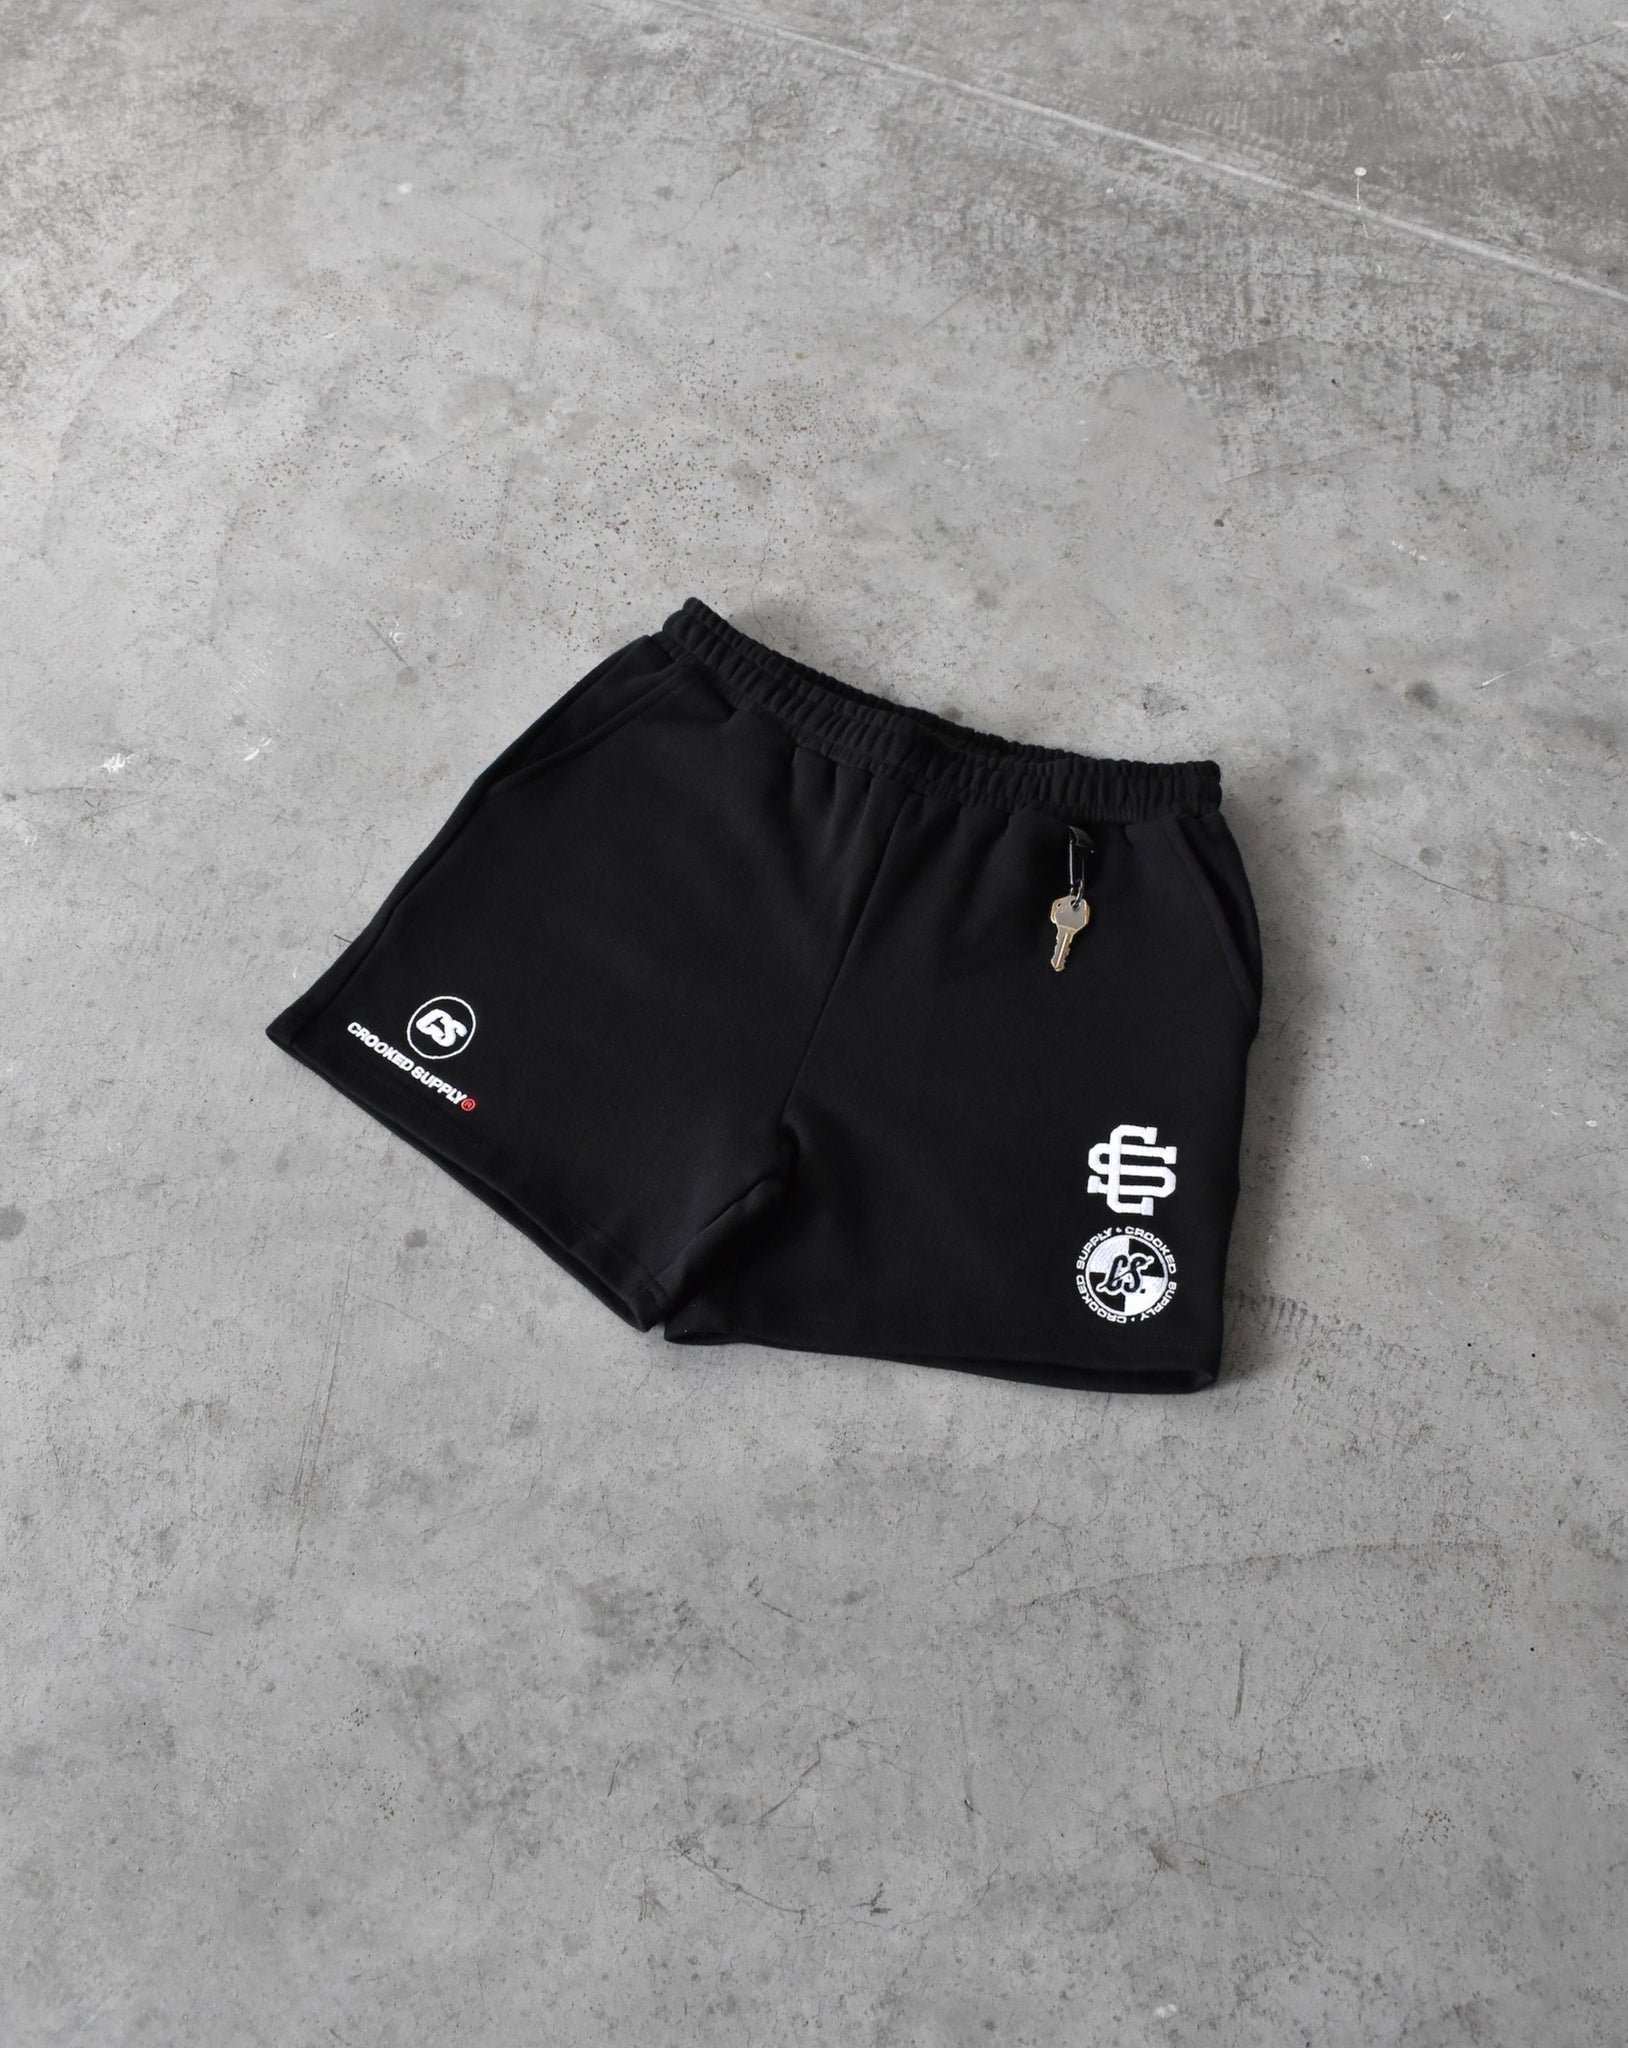 (New) Comfy Sweat Shorts - Black